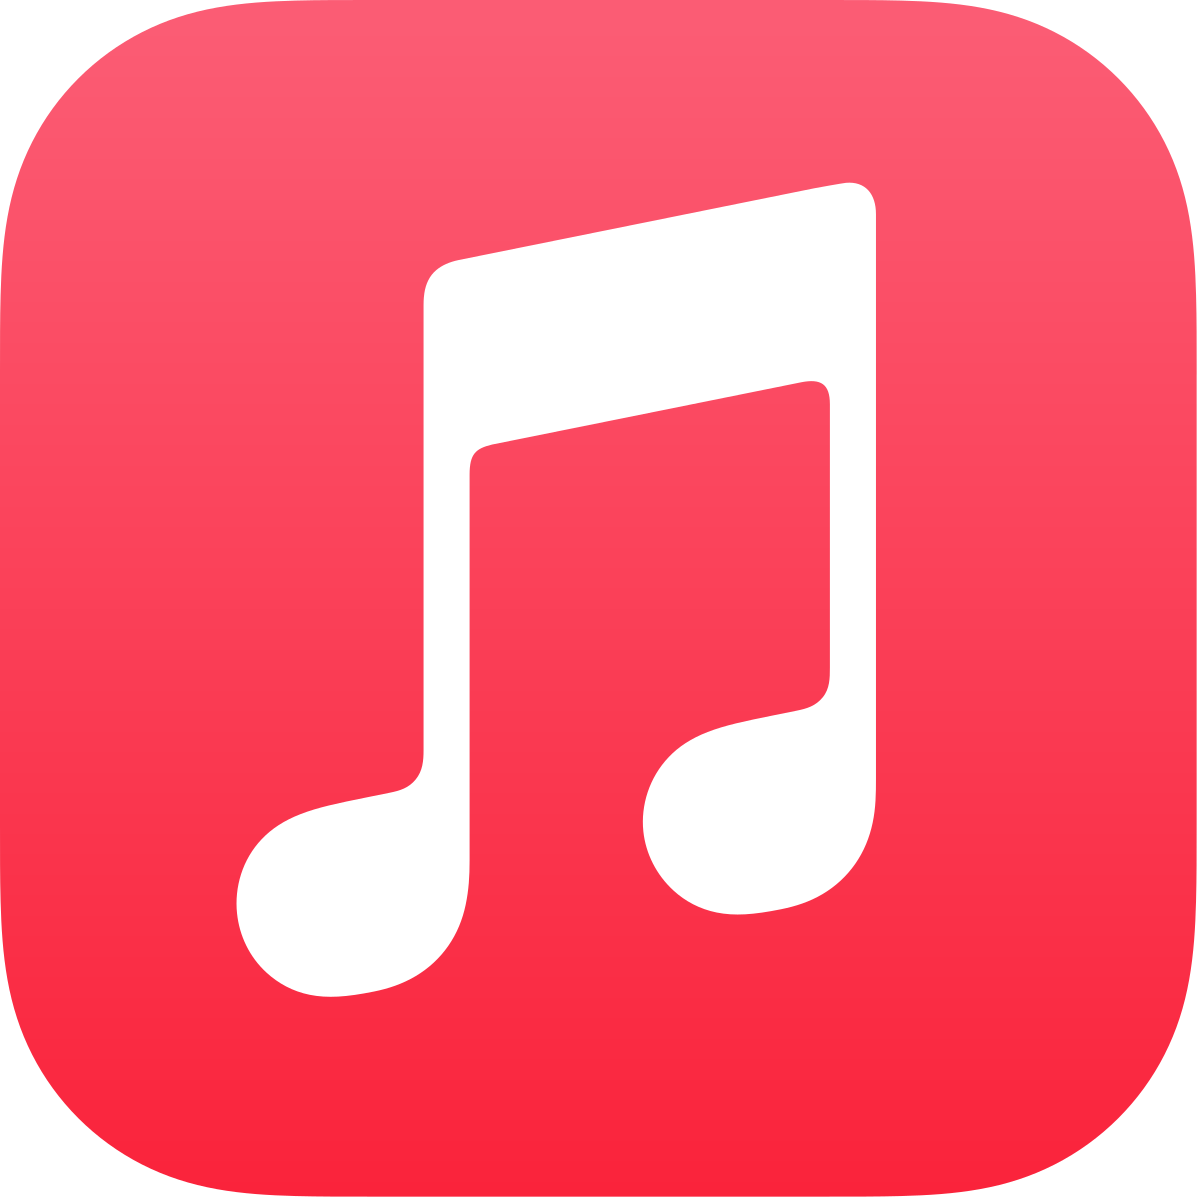 Apple Music - Keith Fullerton Whitman (Copy)